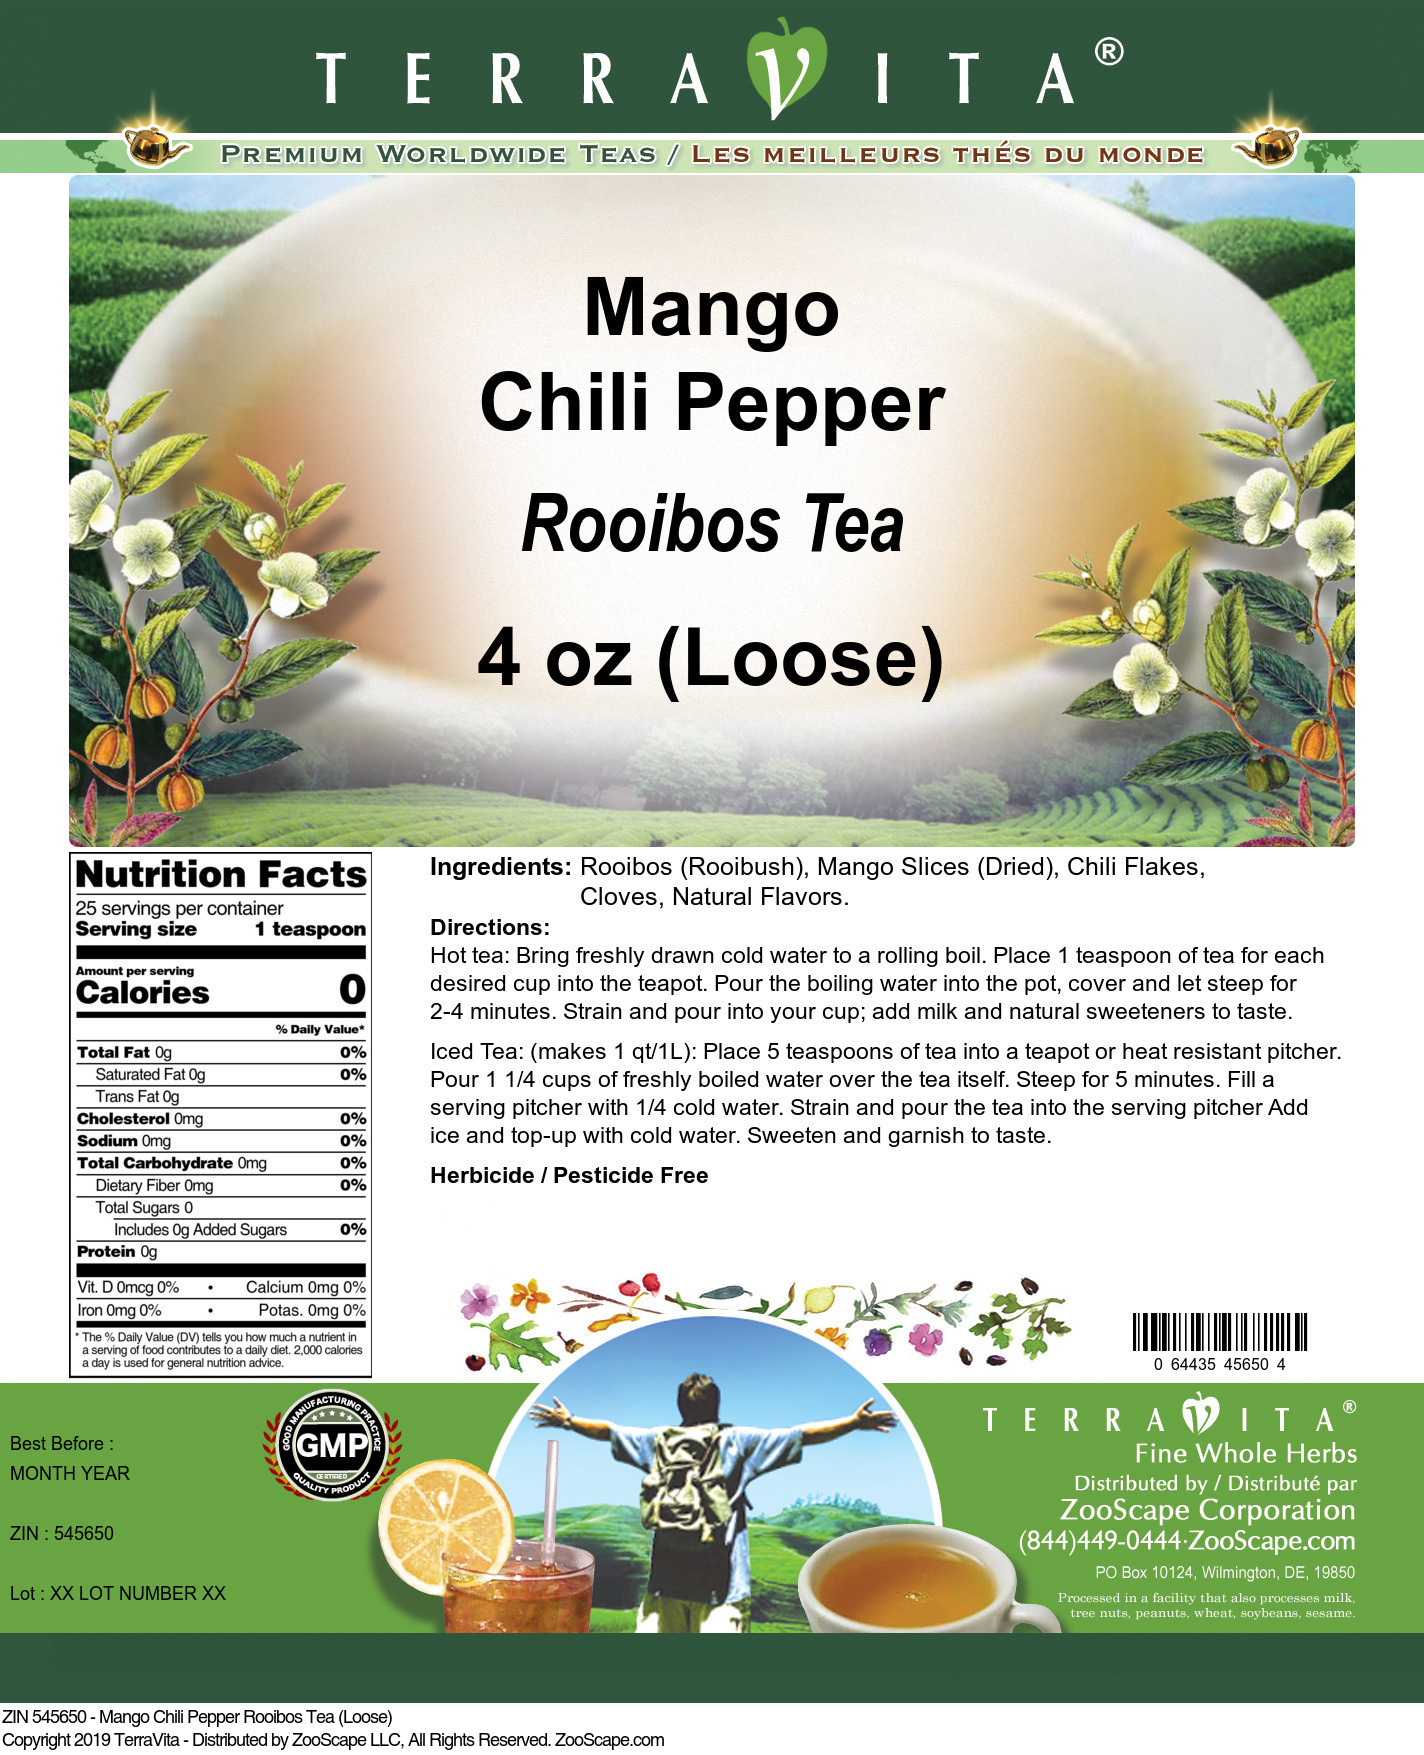 Mango Chili Pepper Rooibos Tea (Loose) - Label